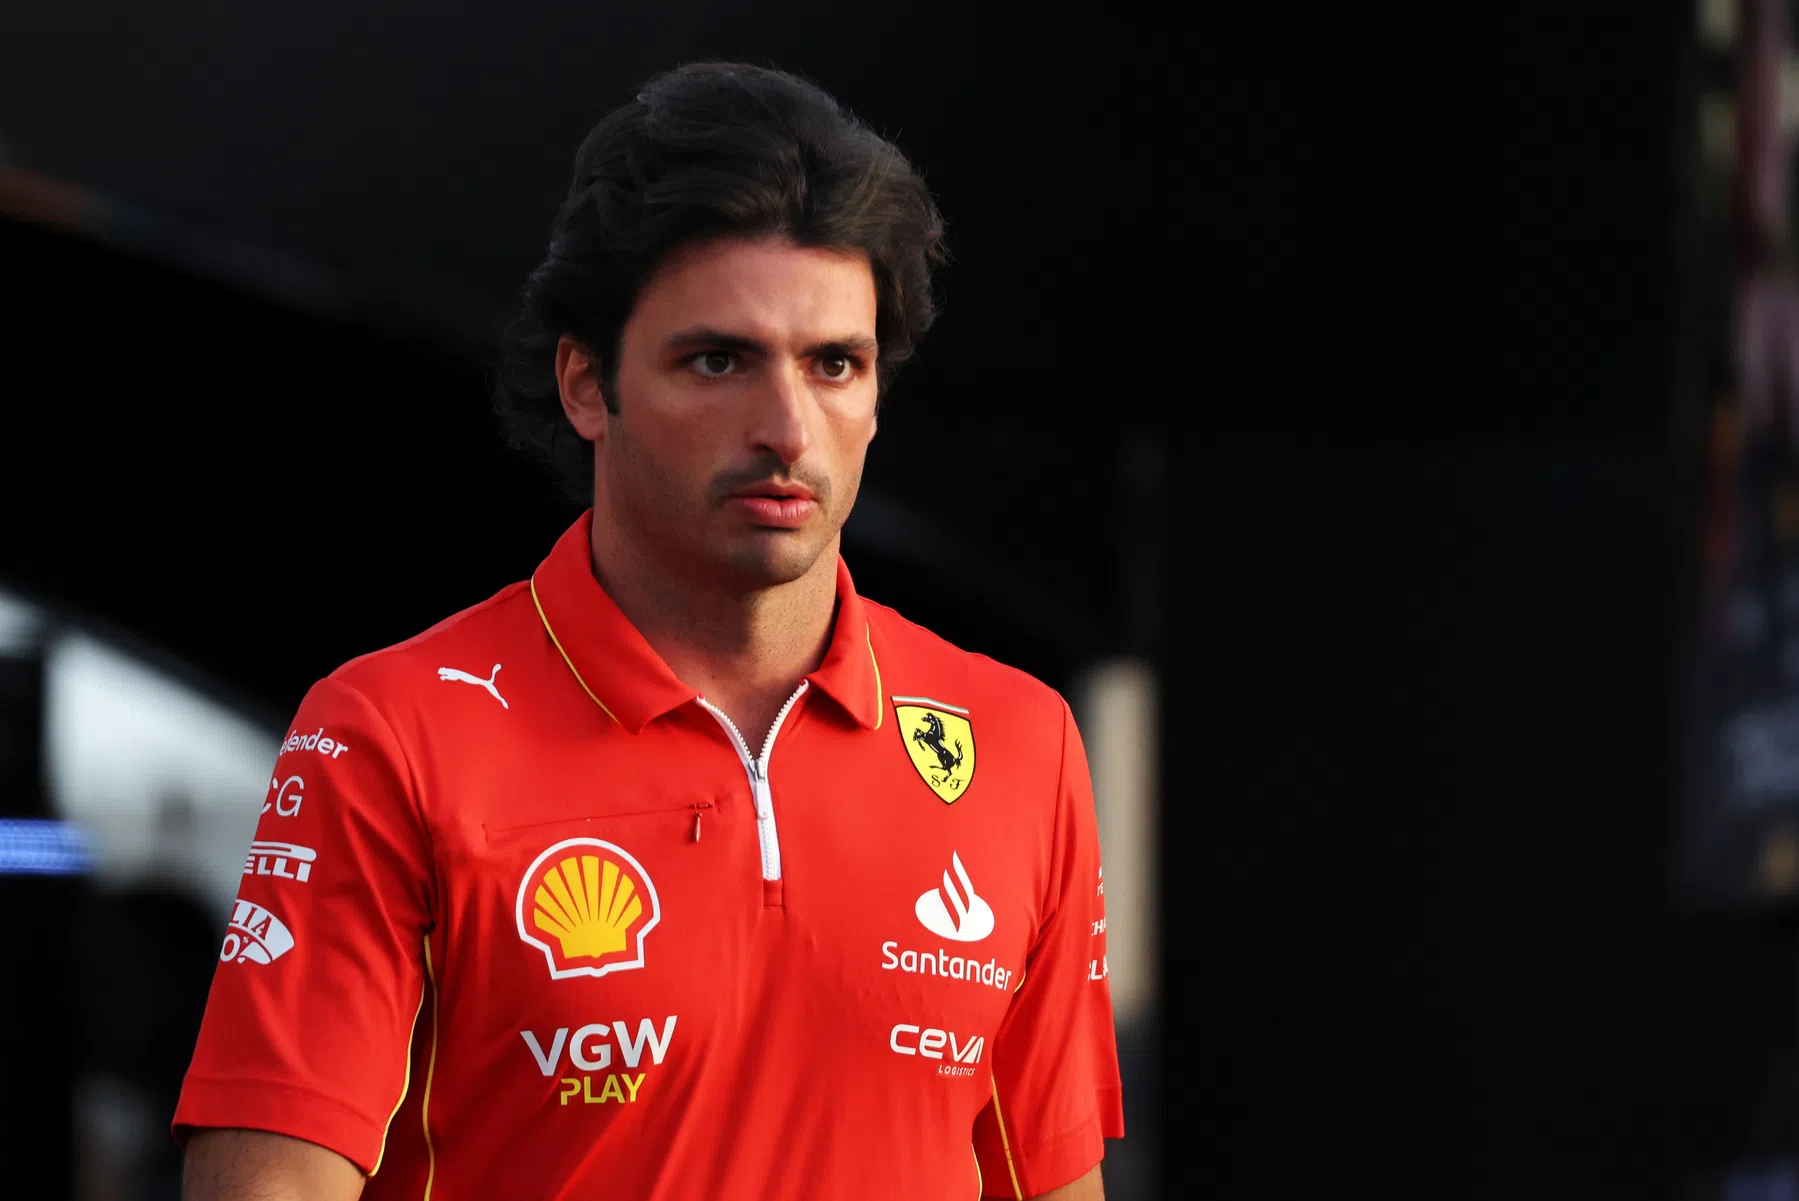 According to Ferrari, Sainz gets behind the wheel again in Melbourne